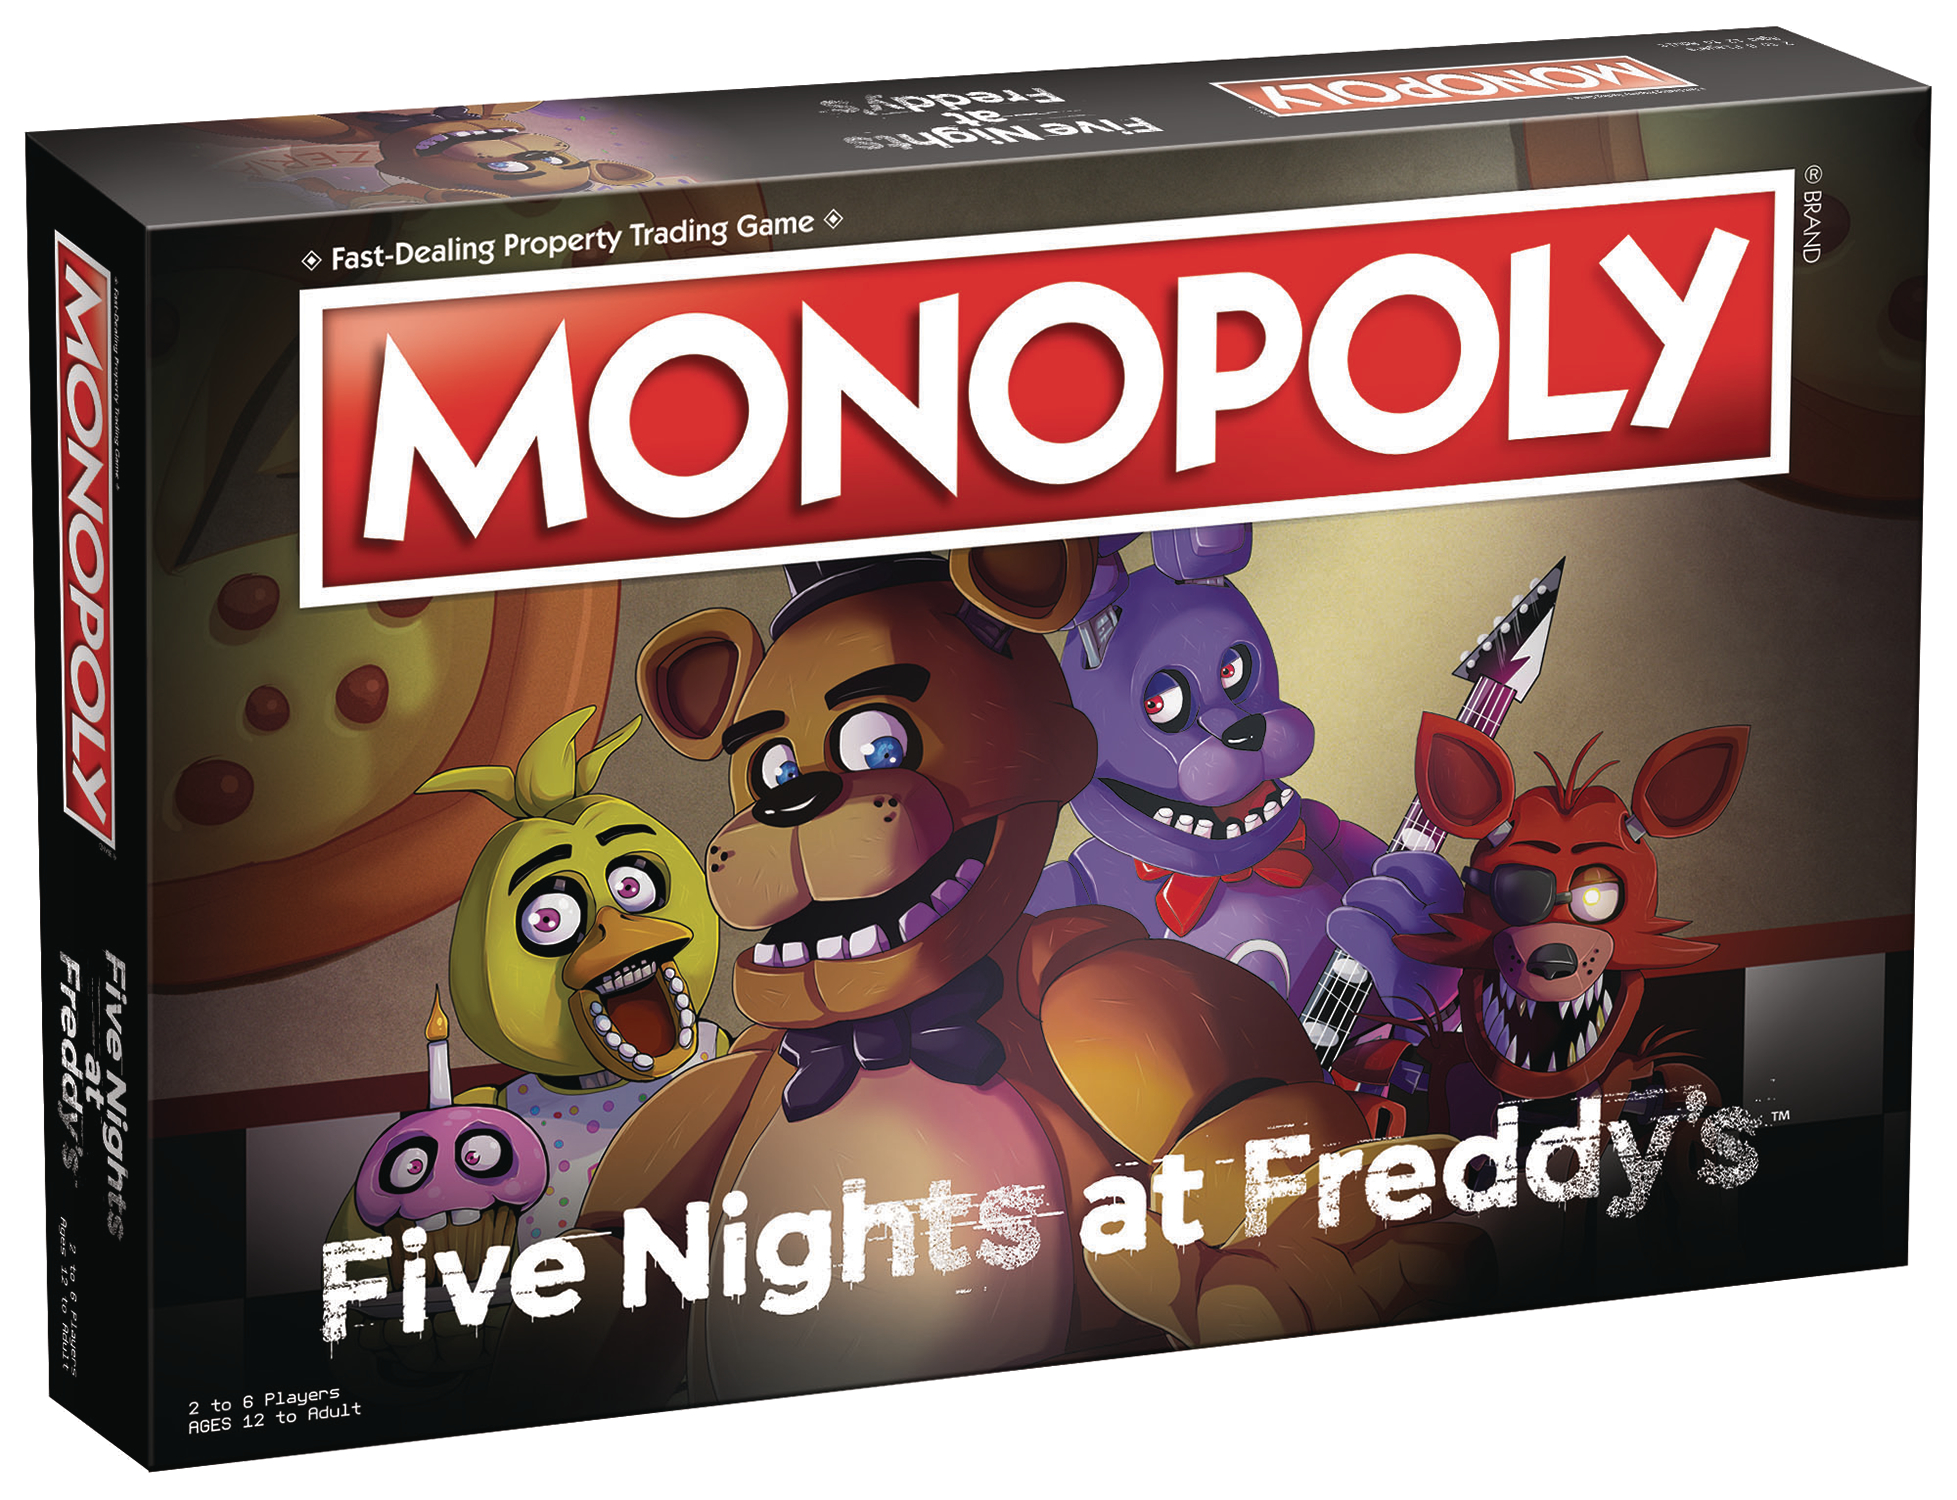 Игру фредди найт. Five Nights at Freddy's настольная игра. Монополия FNAF. Настольная игра 5 ночей с Фредди (Five Nights at Freddy's). Игра FNAF Monopoly.